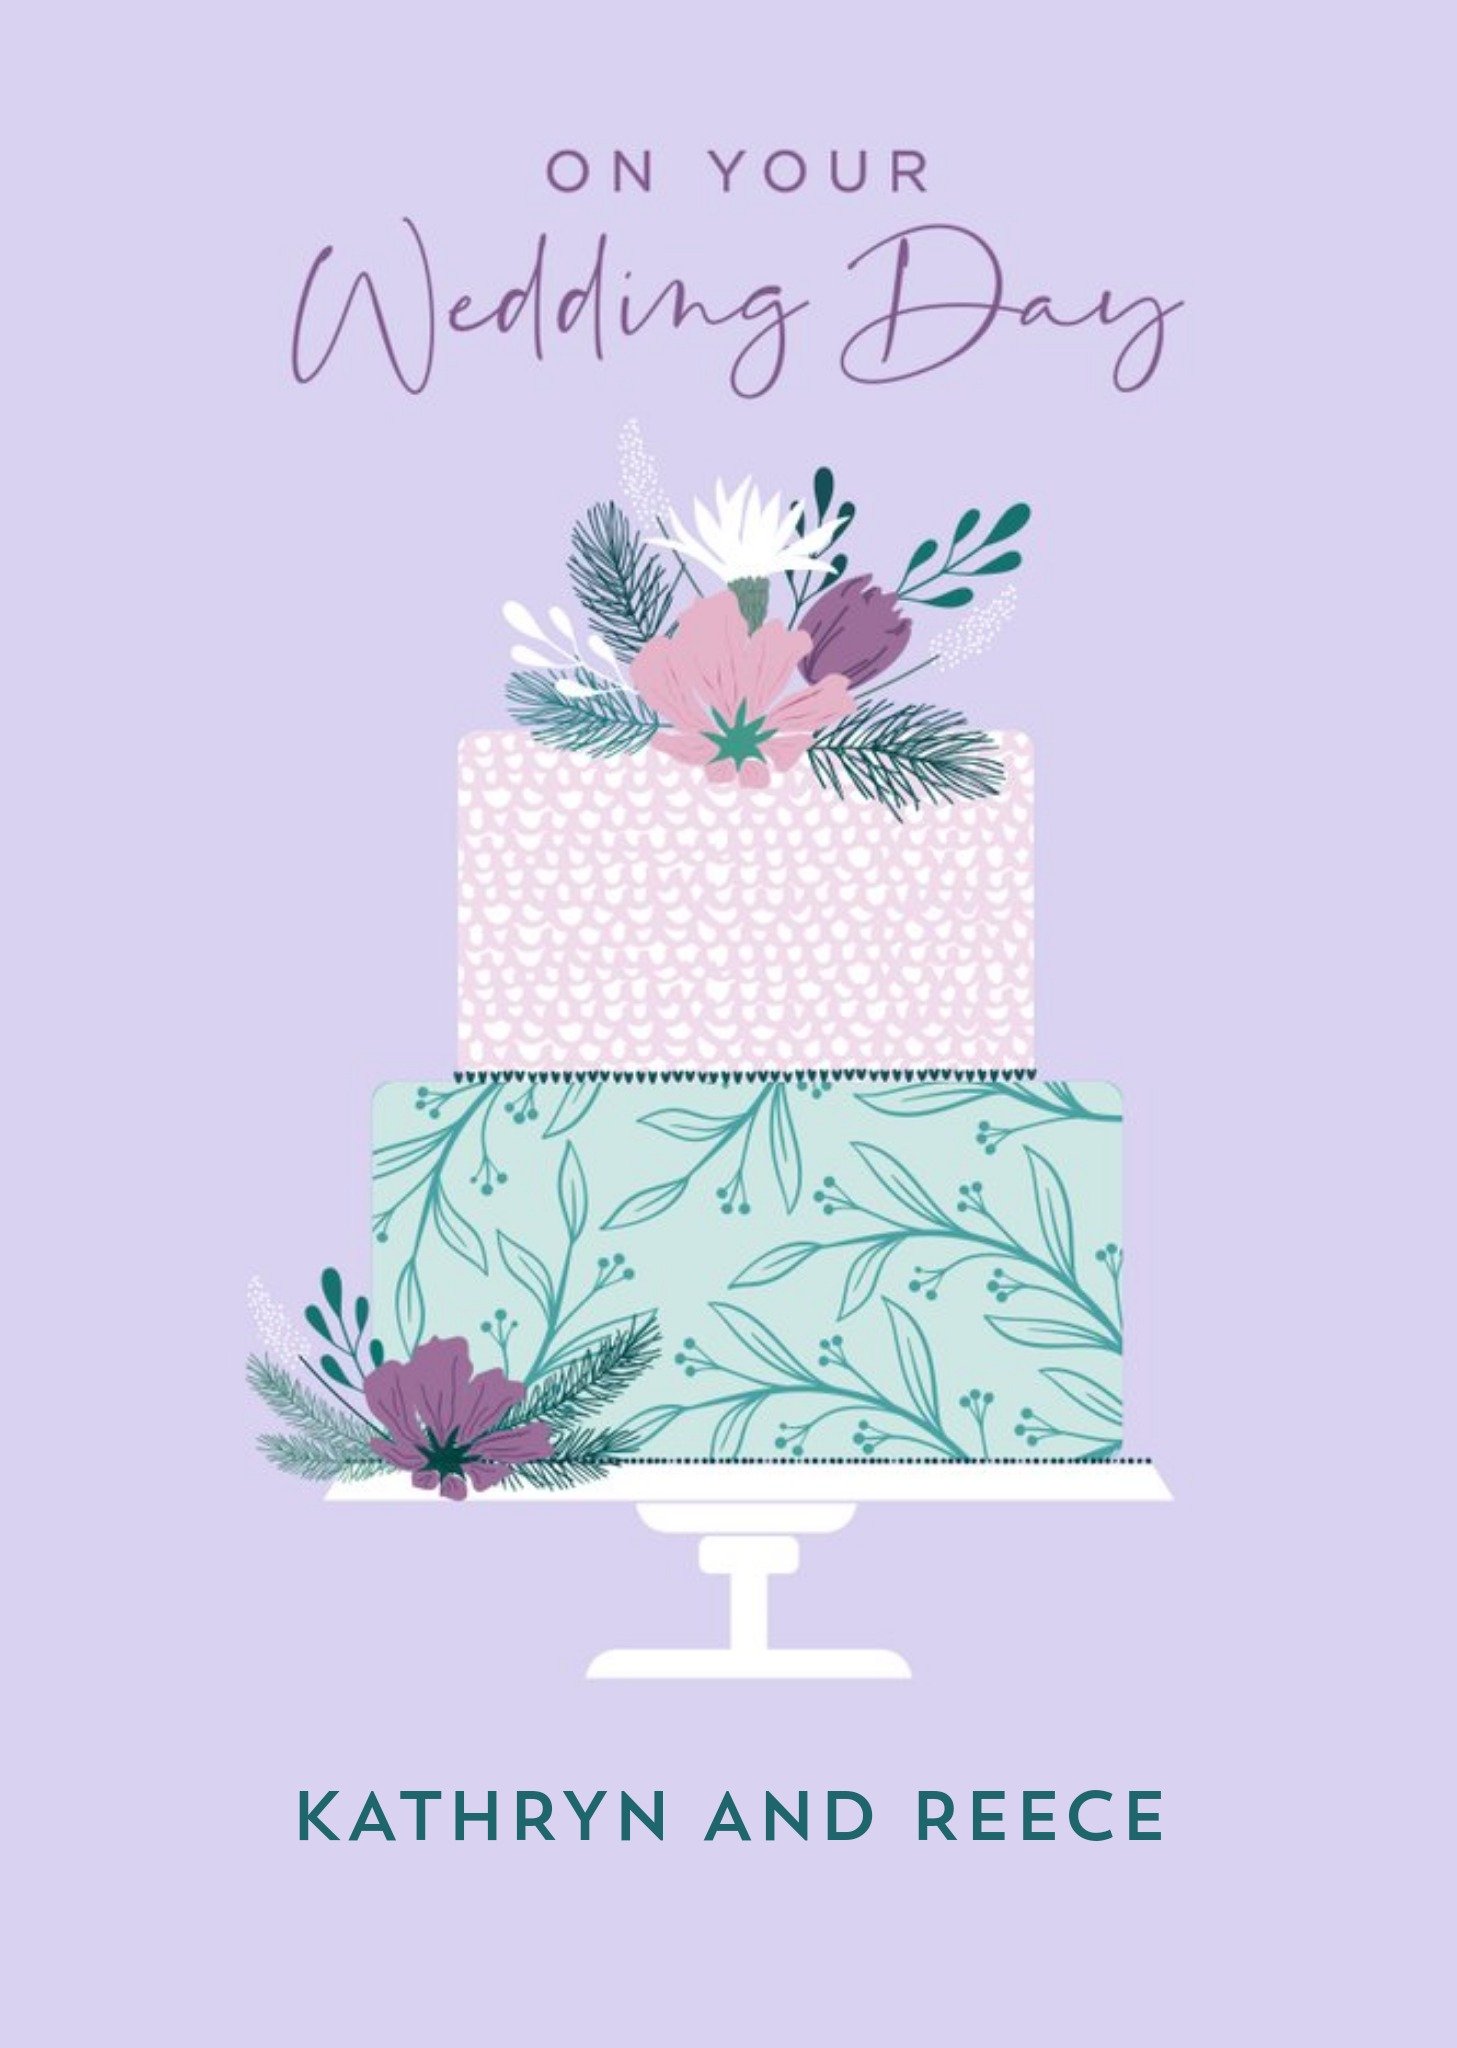 Moonpig Pretty Illustration Of Wedding Cake Wedding Card, Large